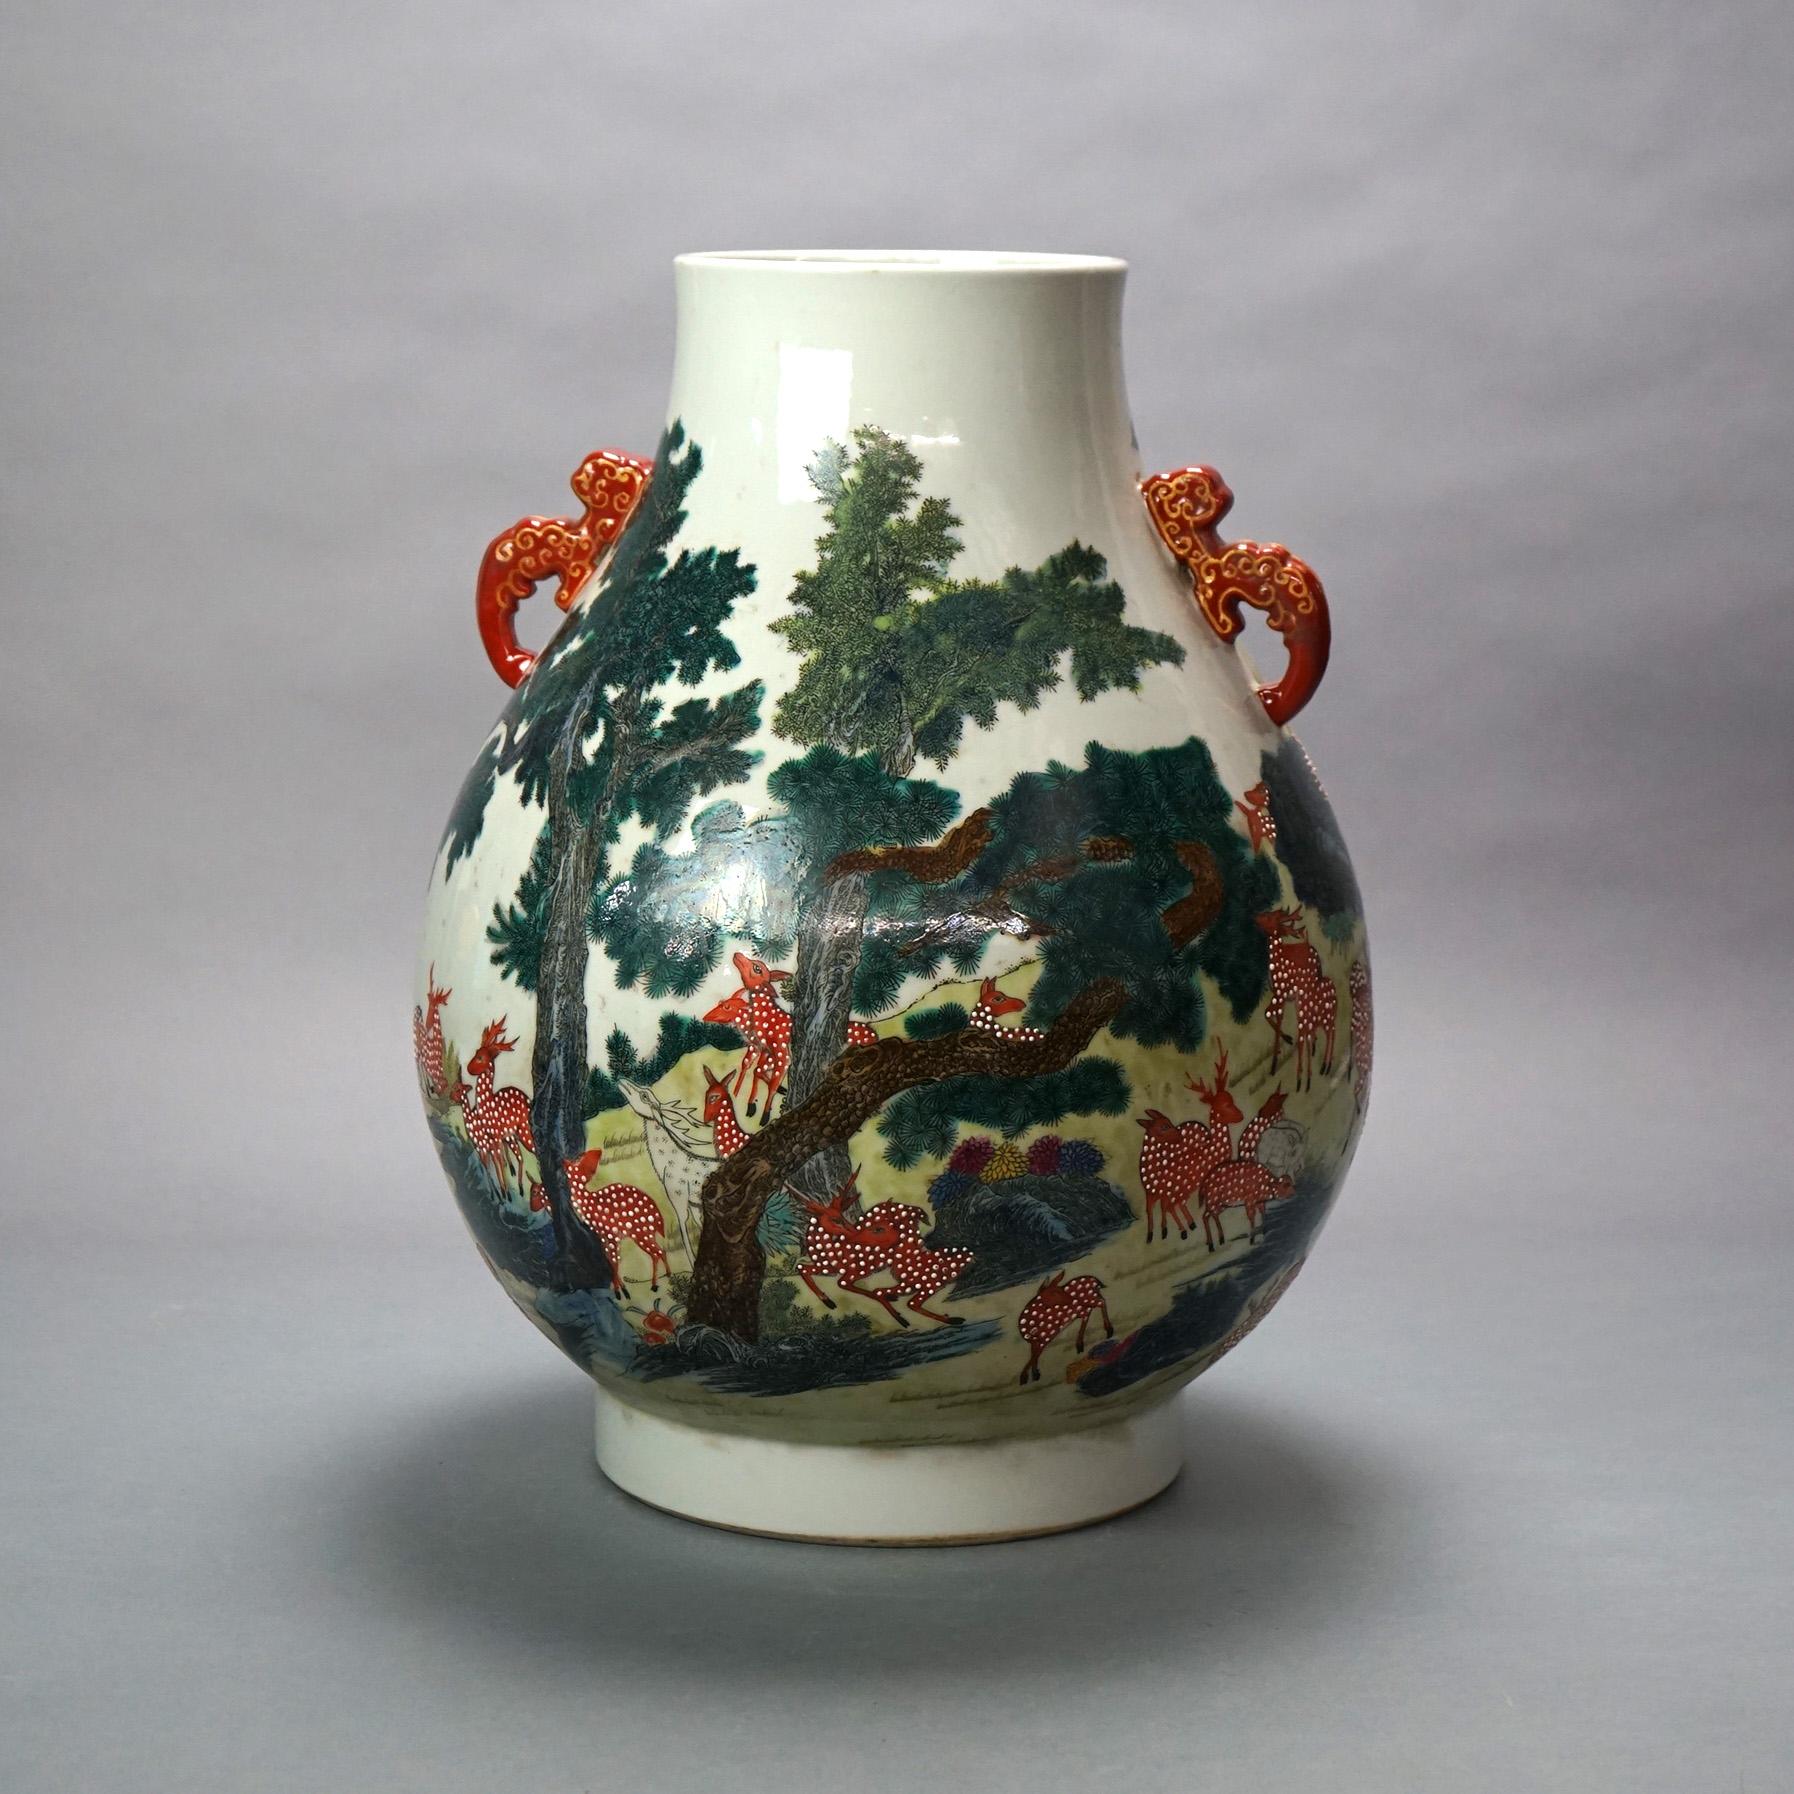 Large Chinese Famille Rose Hu Figural Landscape Porcelain Vase with Figures, Animals, Double Dragon Handles & Qianlong Mark 20thC

Measures- 18.5''H x 14''W x 14''D